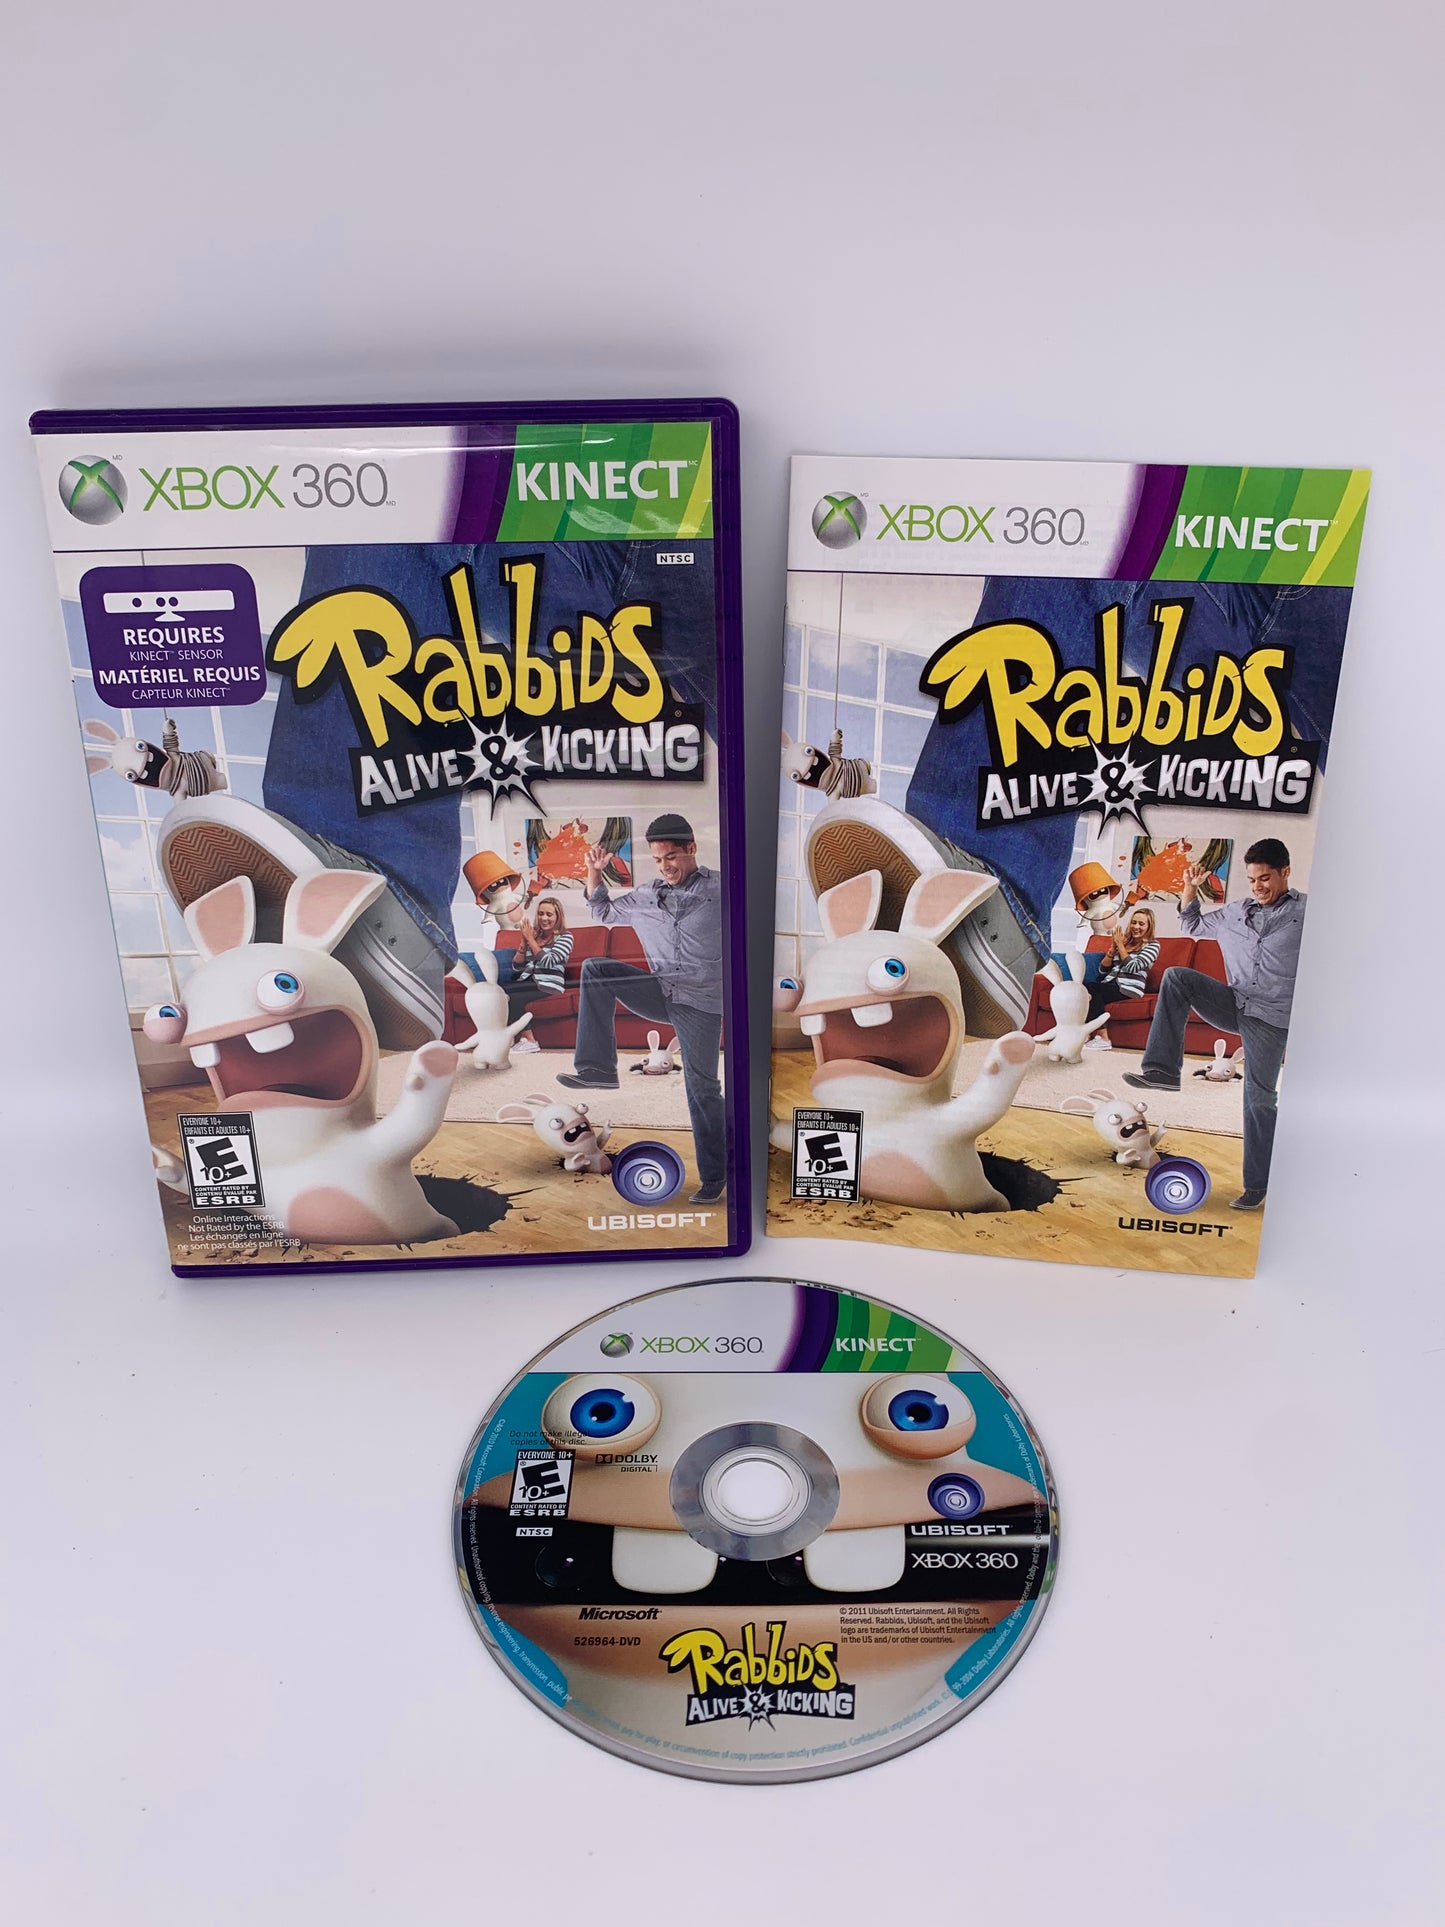 PiXEL-RETRO.COM : MICROSOFT XBOX 360 COMPLETE CIB BOX MANUAL GAME NTSC KINECT RABBIDS ALIVE & KICKING